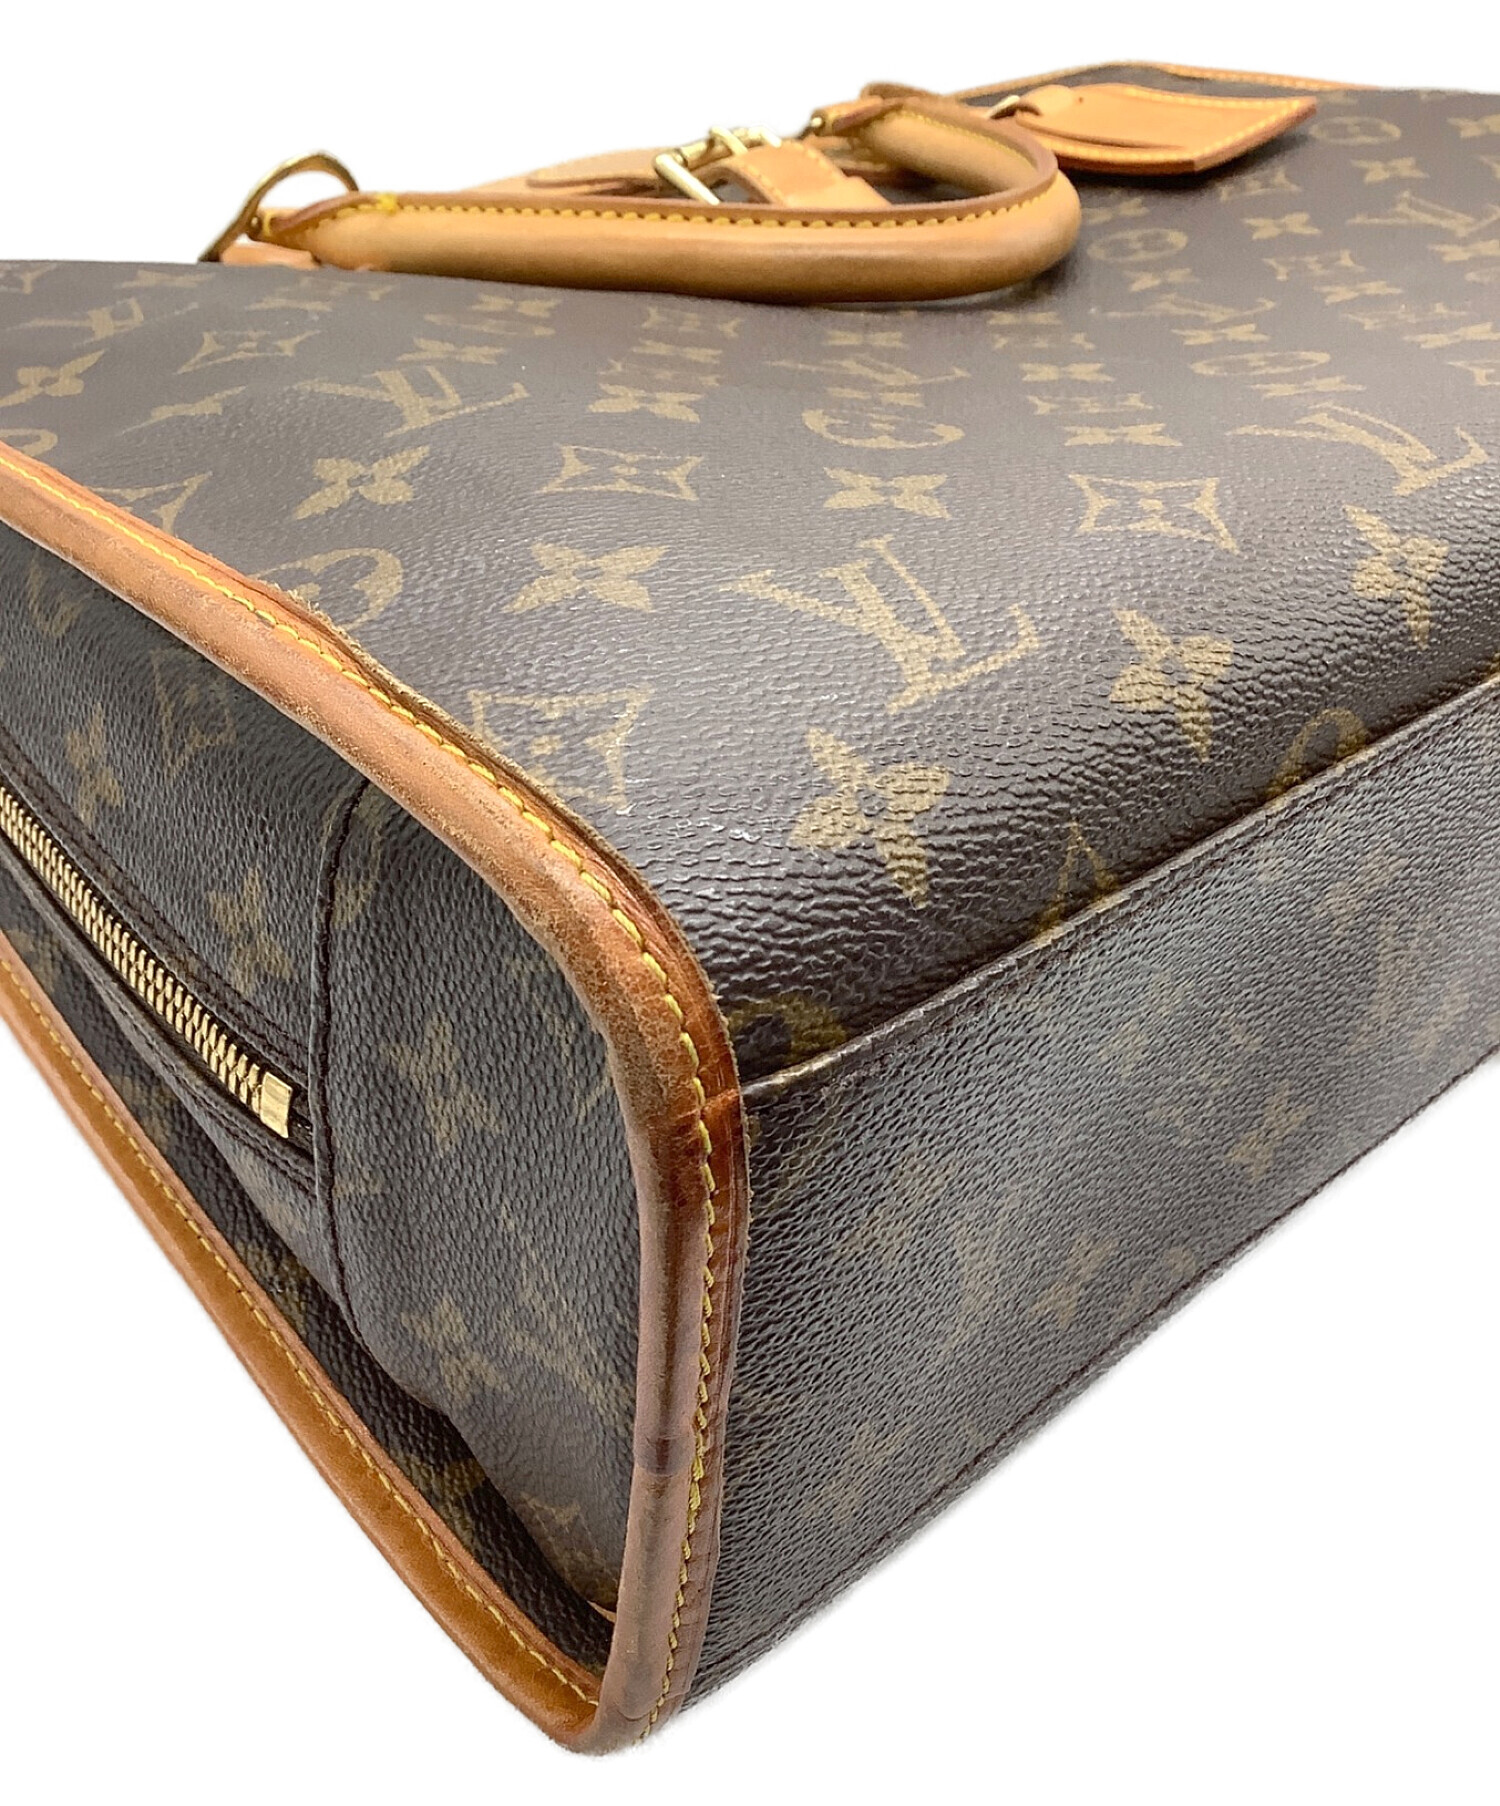 Louis Vuitton Monogram Rivoli Business Bag M53380